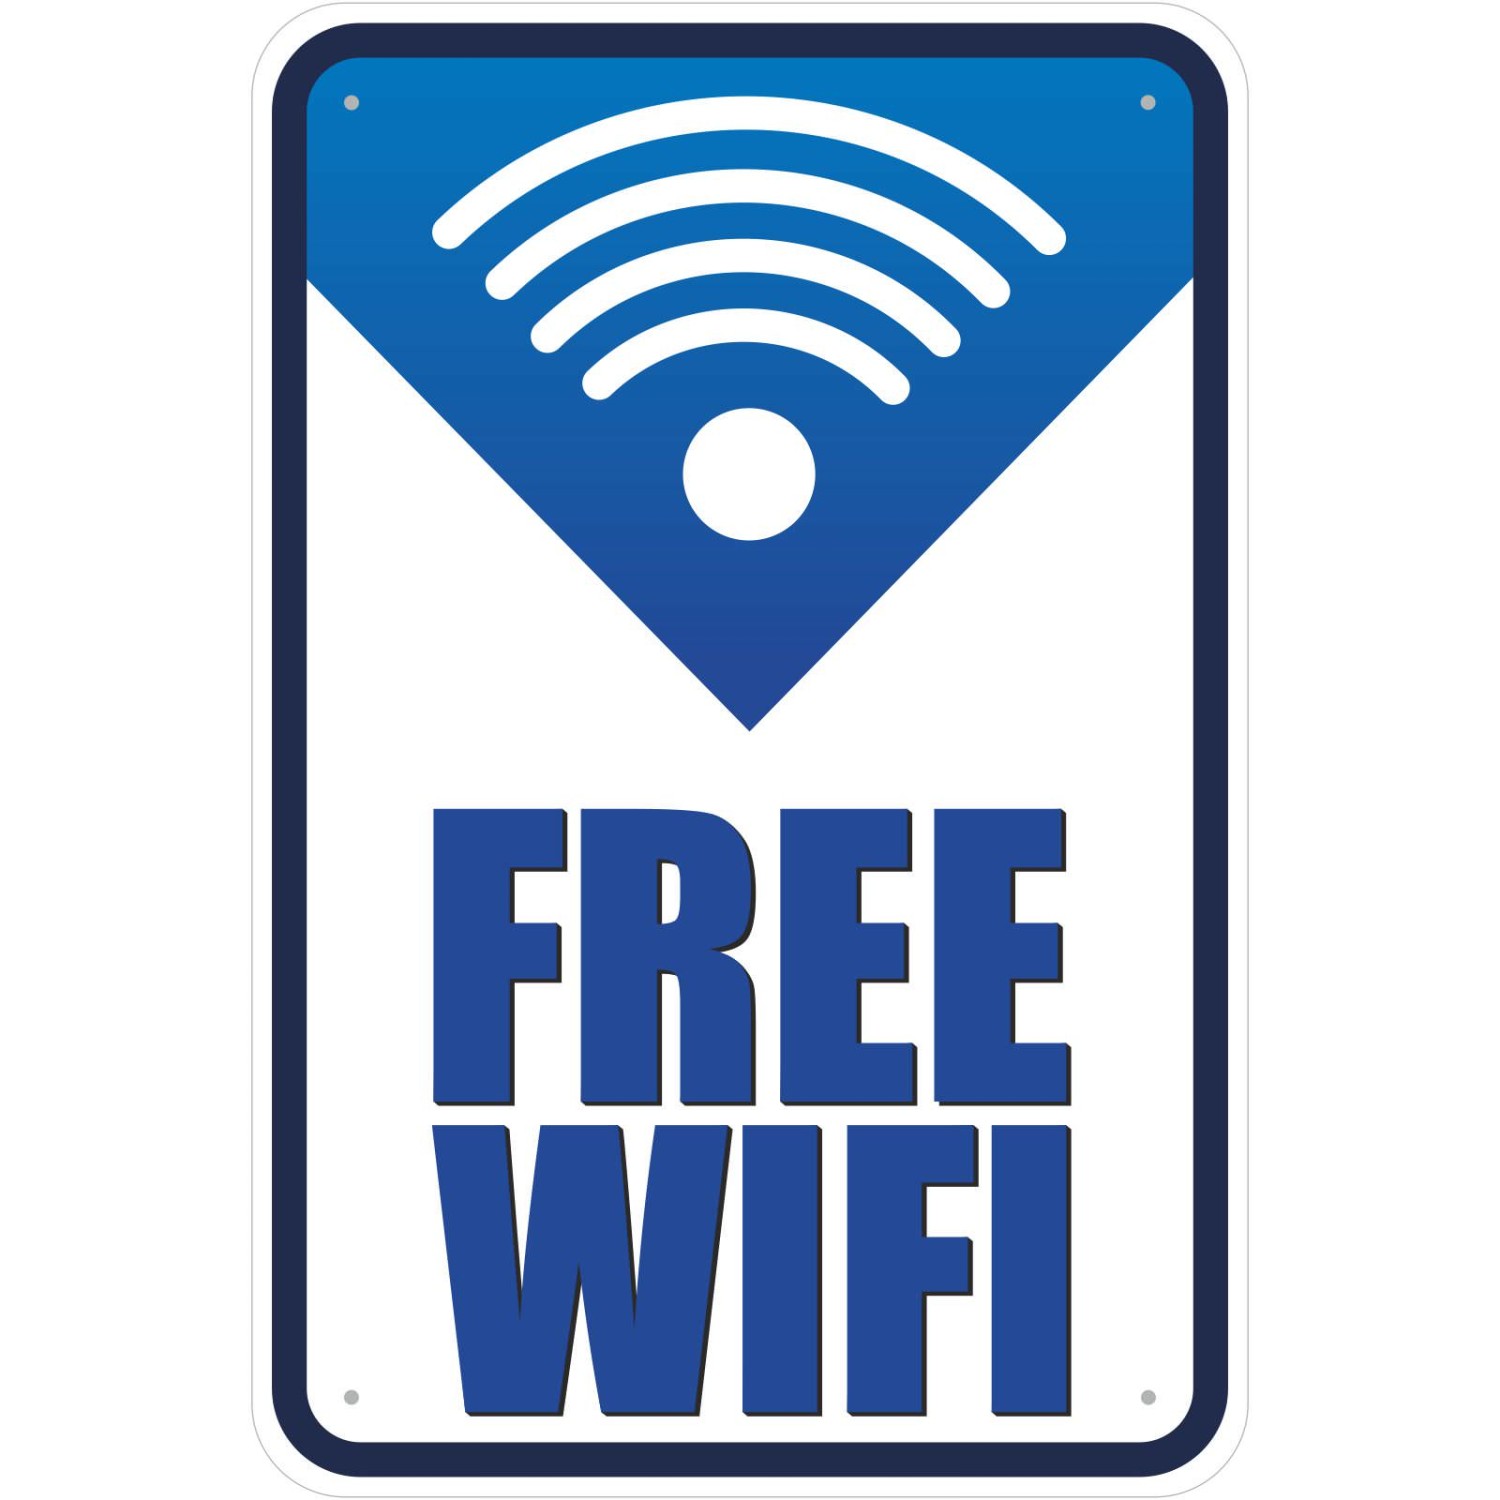 Aufkleber Free Wifi freies offenes WLAN Internet Hotspot (Material und Größe: Aufkleber 20x30cm)